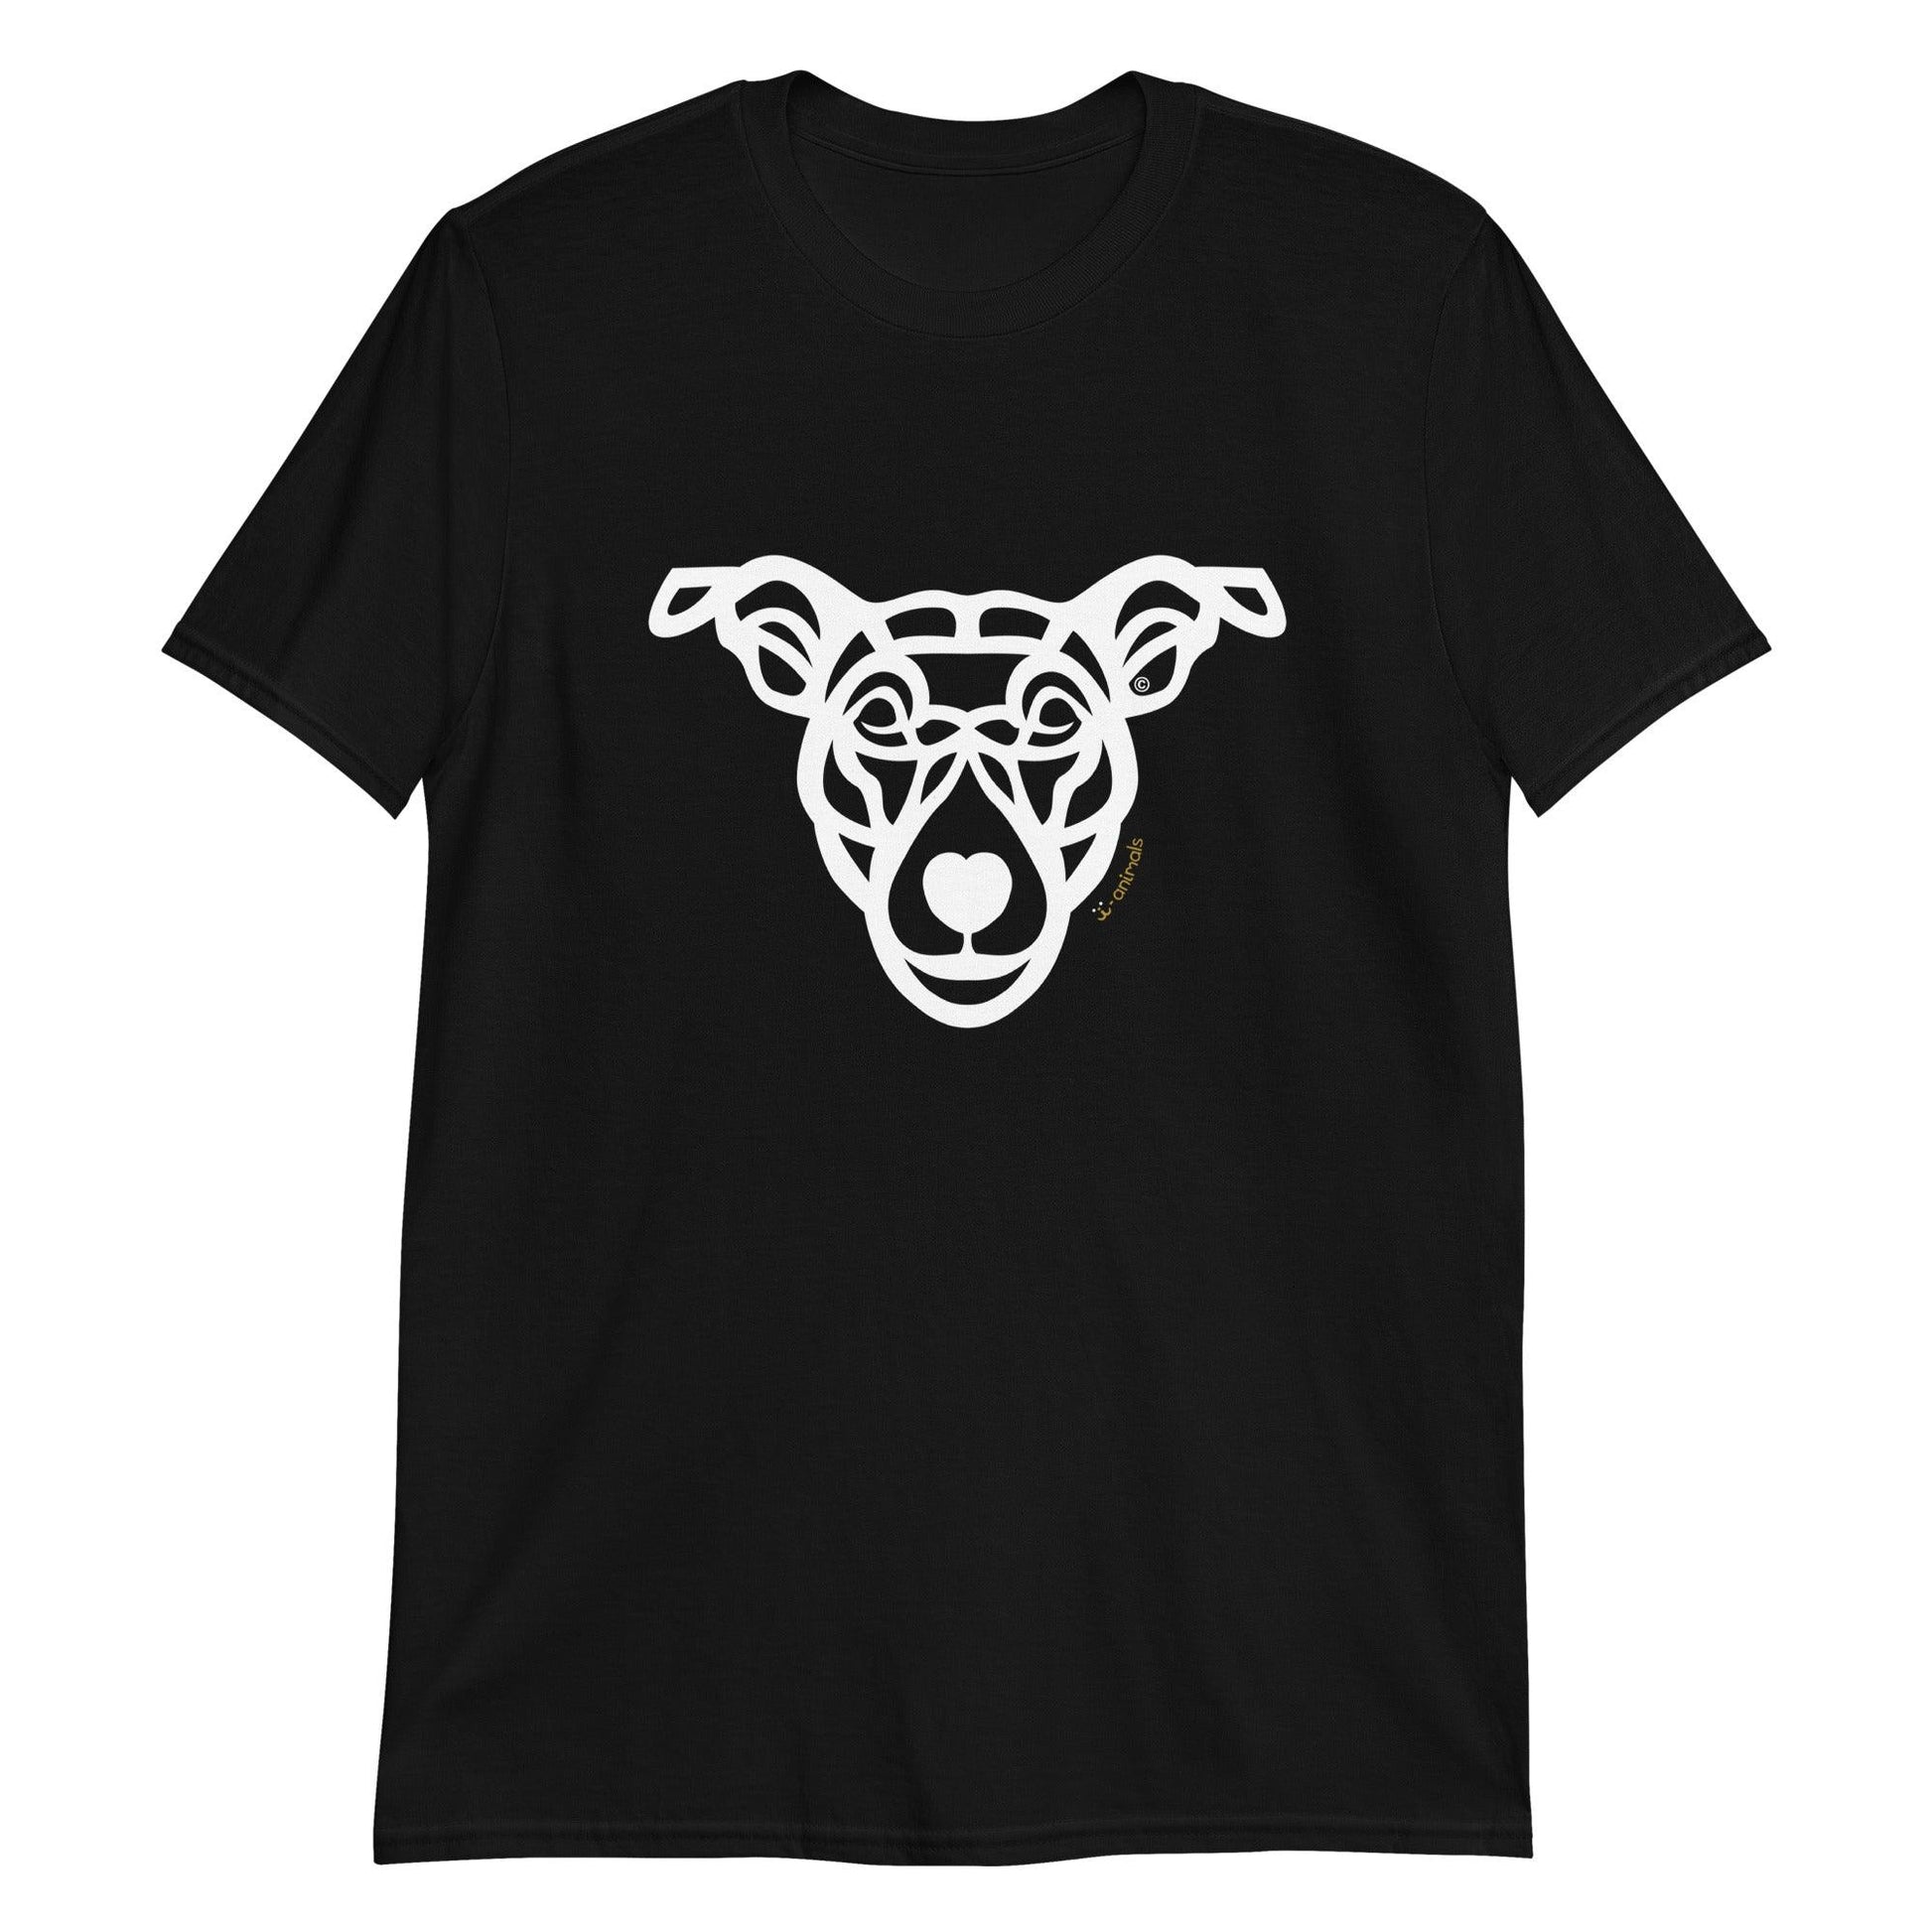 Camiseta unissex de manga curta - “cão vira-lata” - Tribal - i-animals